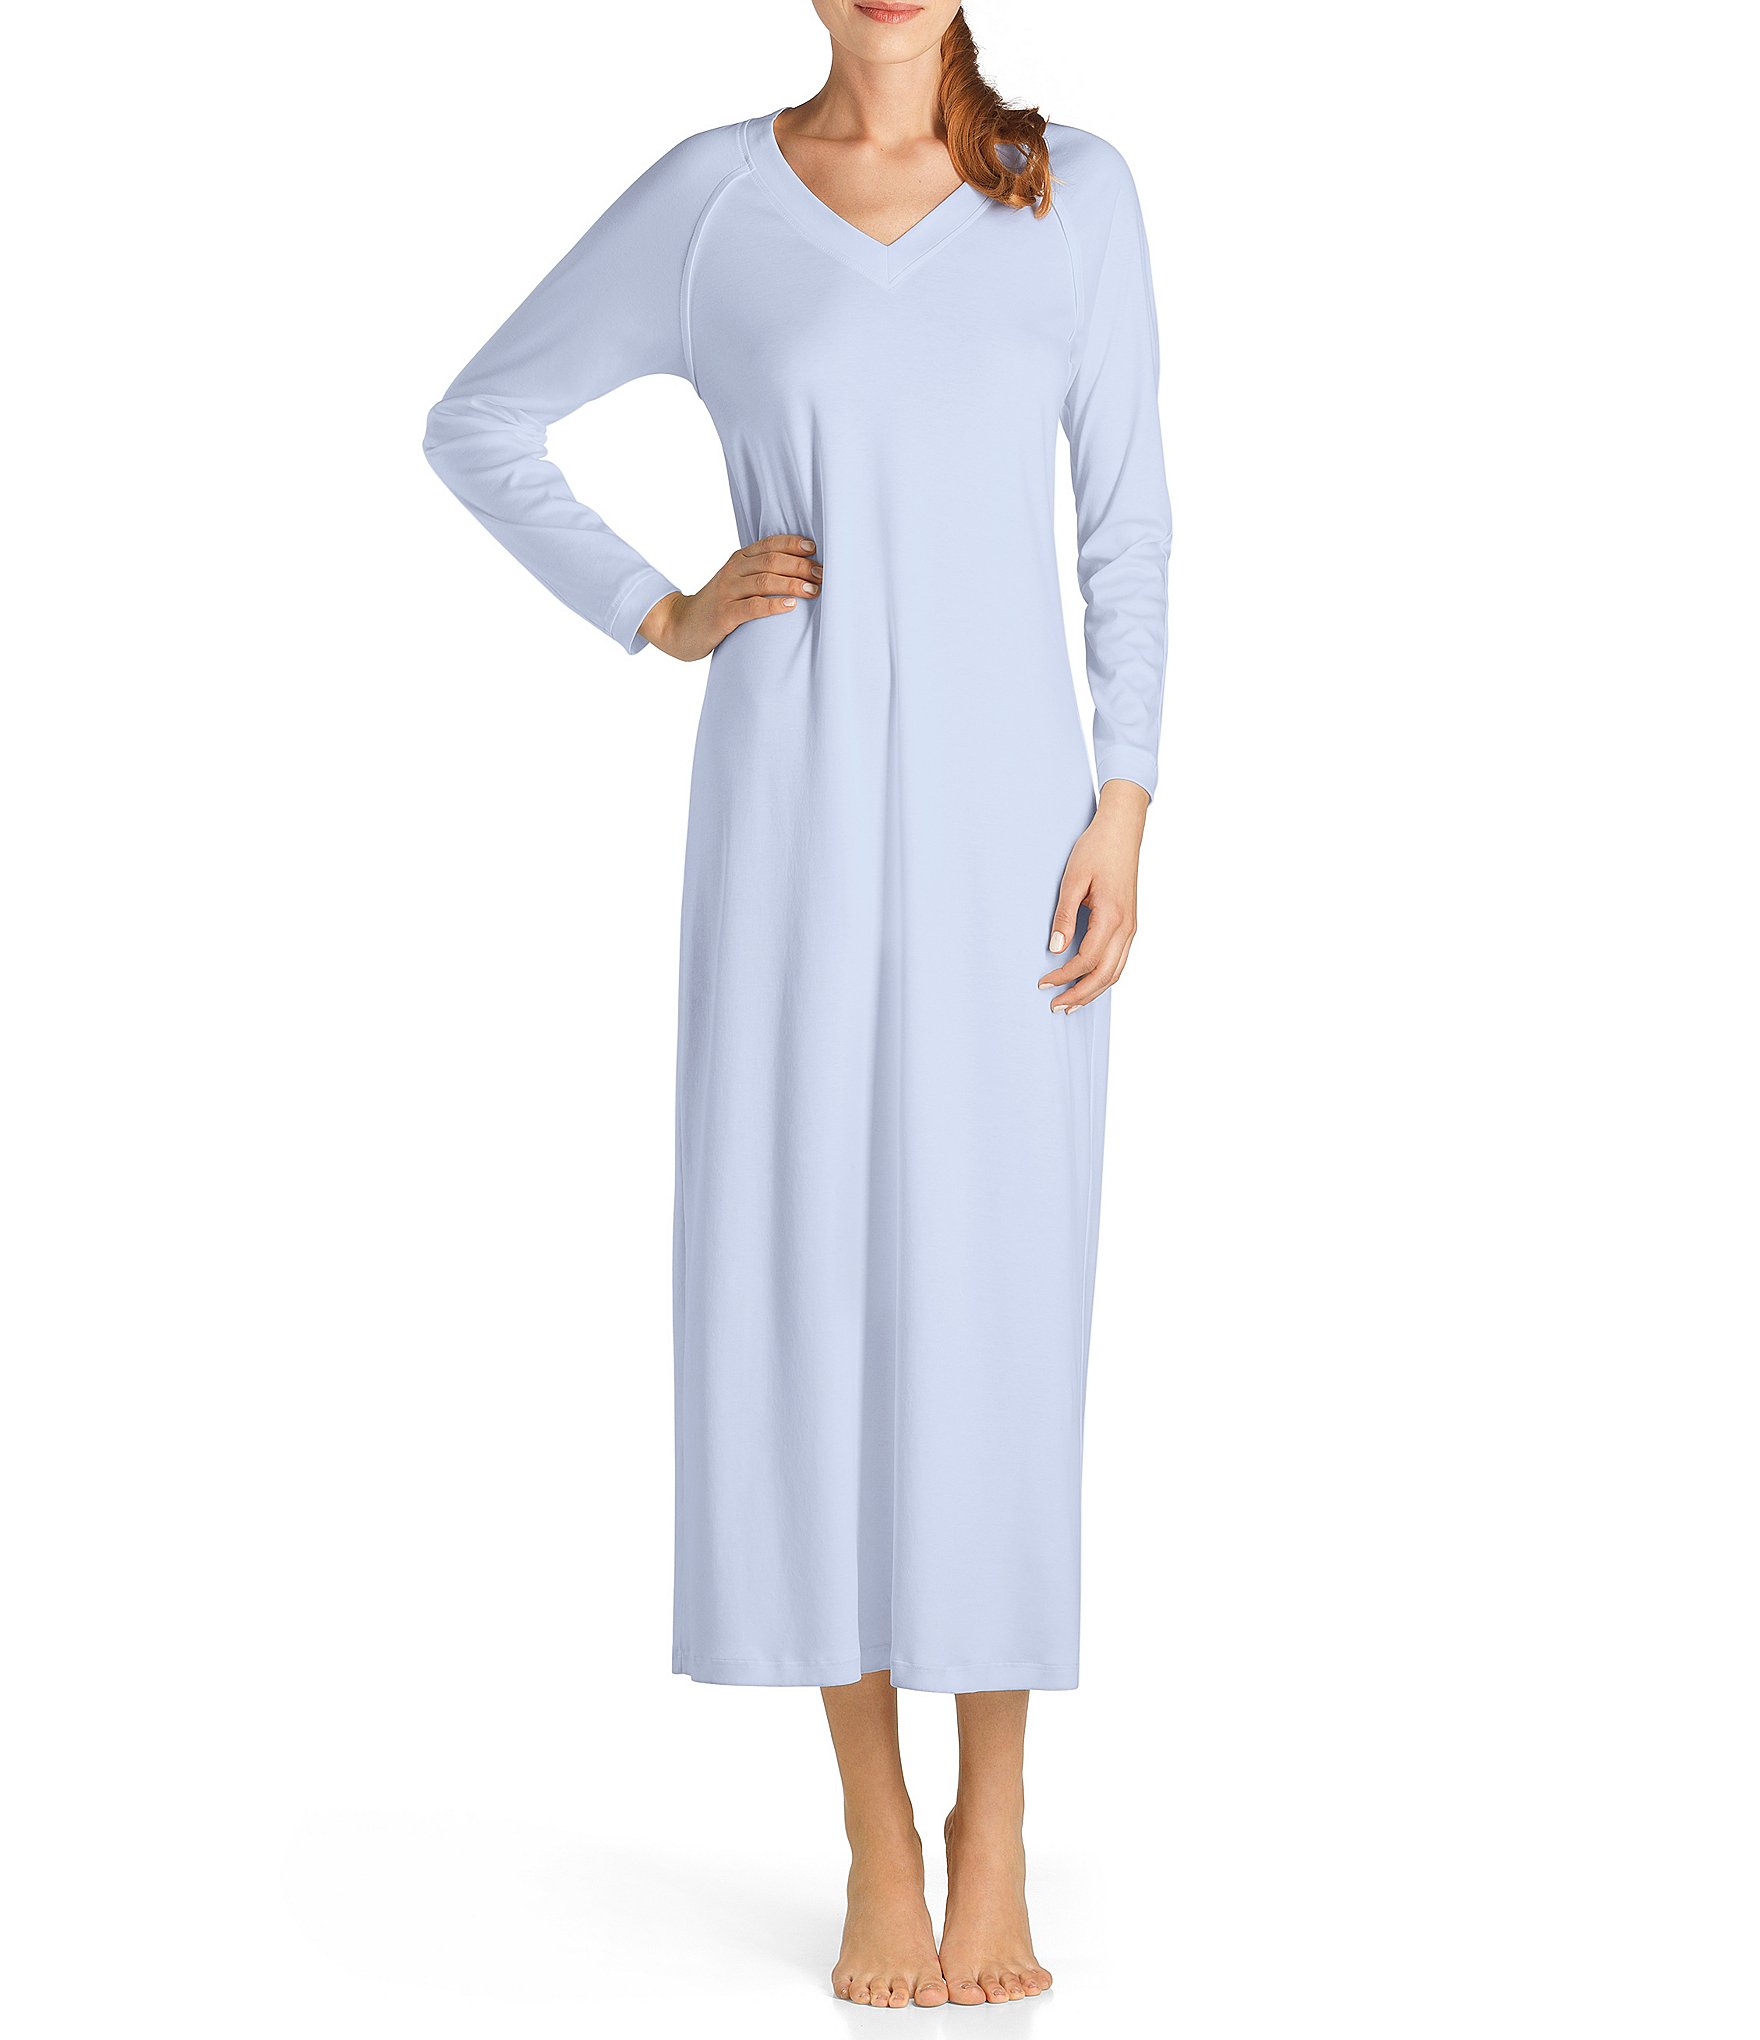 Godsen Womens Cotton Nightgown Long Sleeve Nightshirts